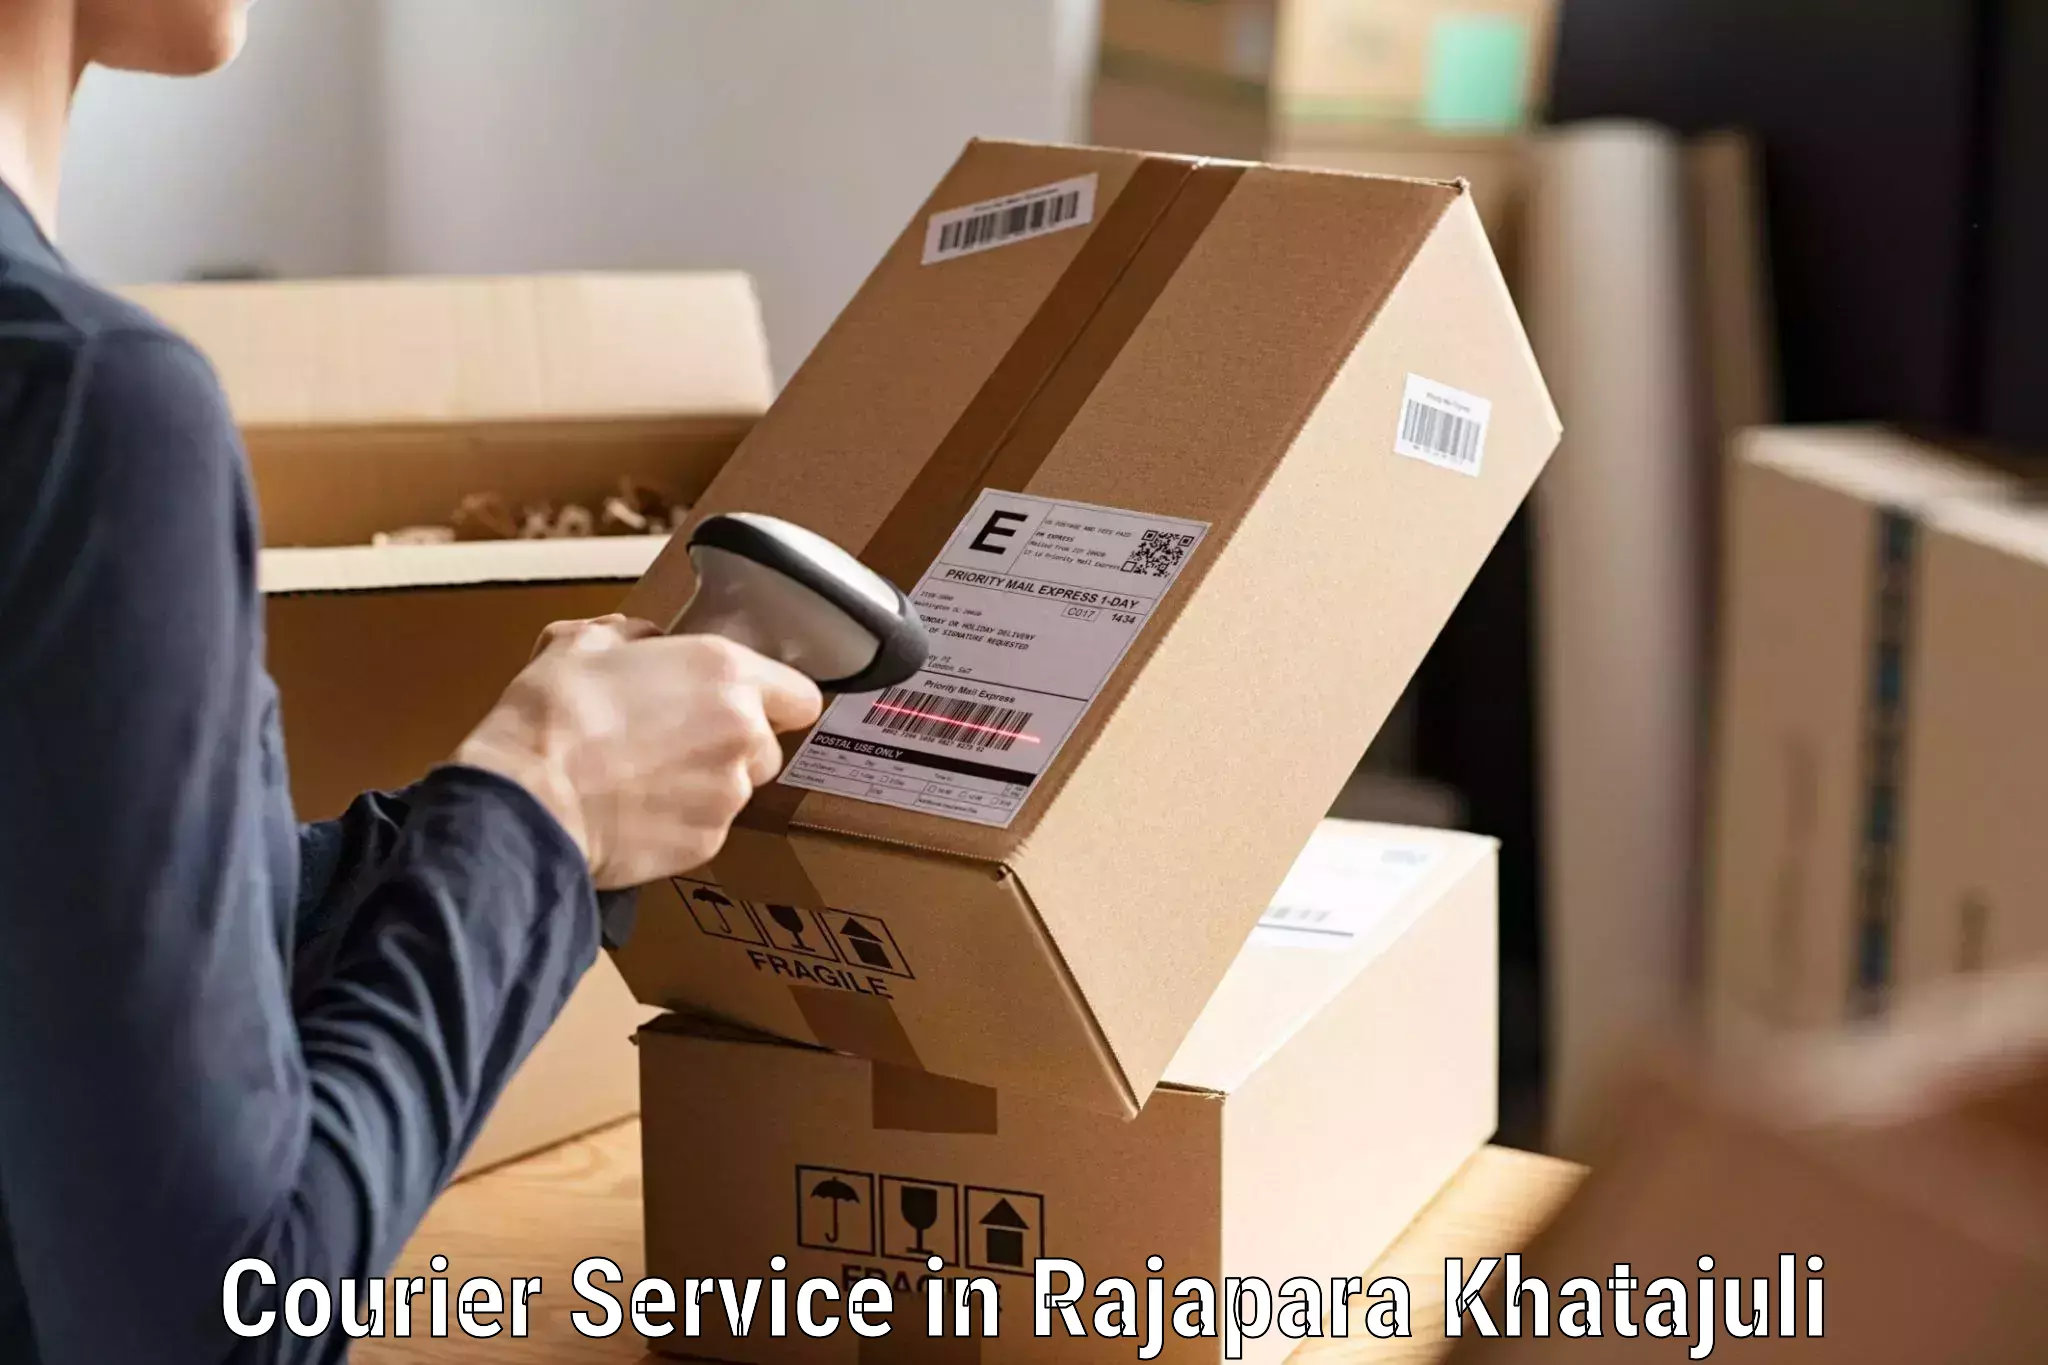 Enhanced tracking features in Rajapara Khatajuli